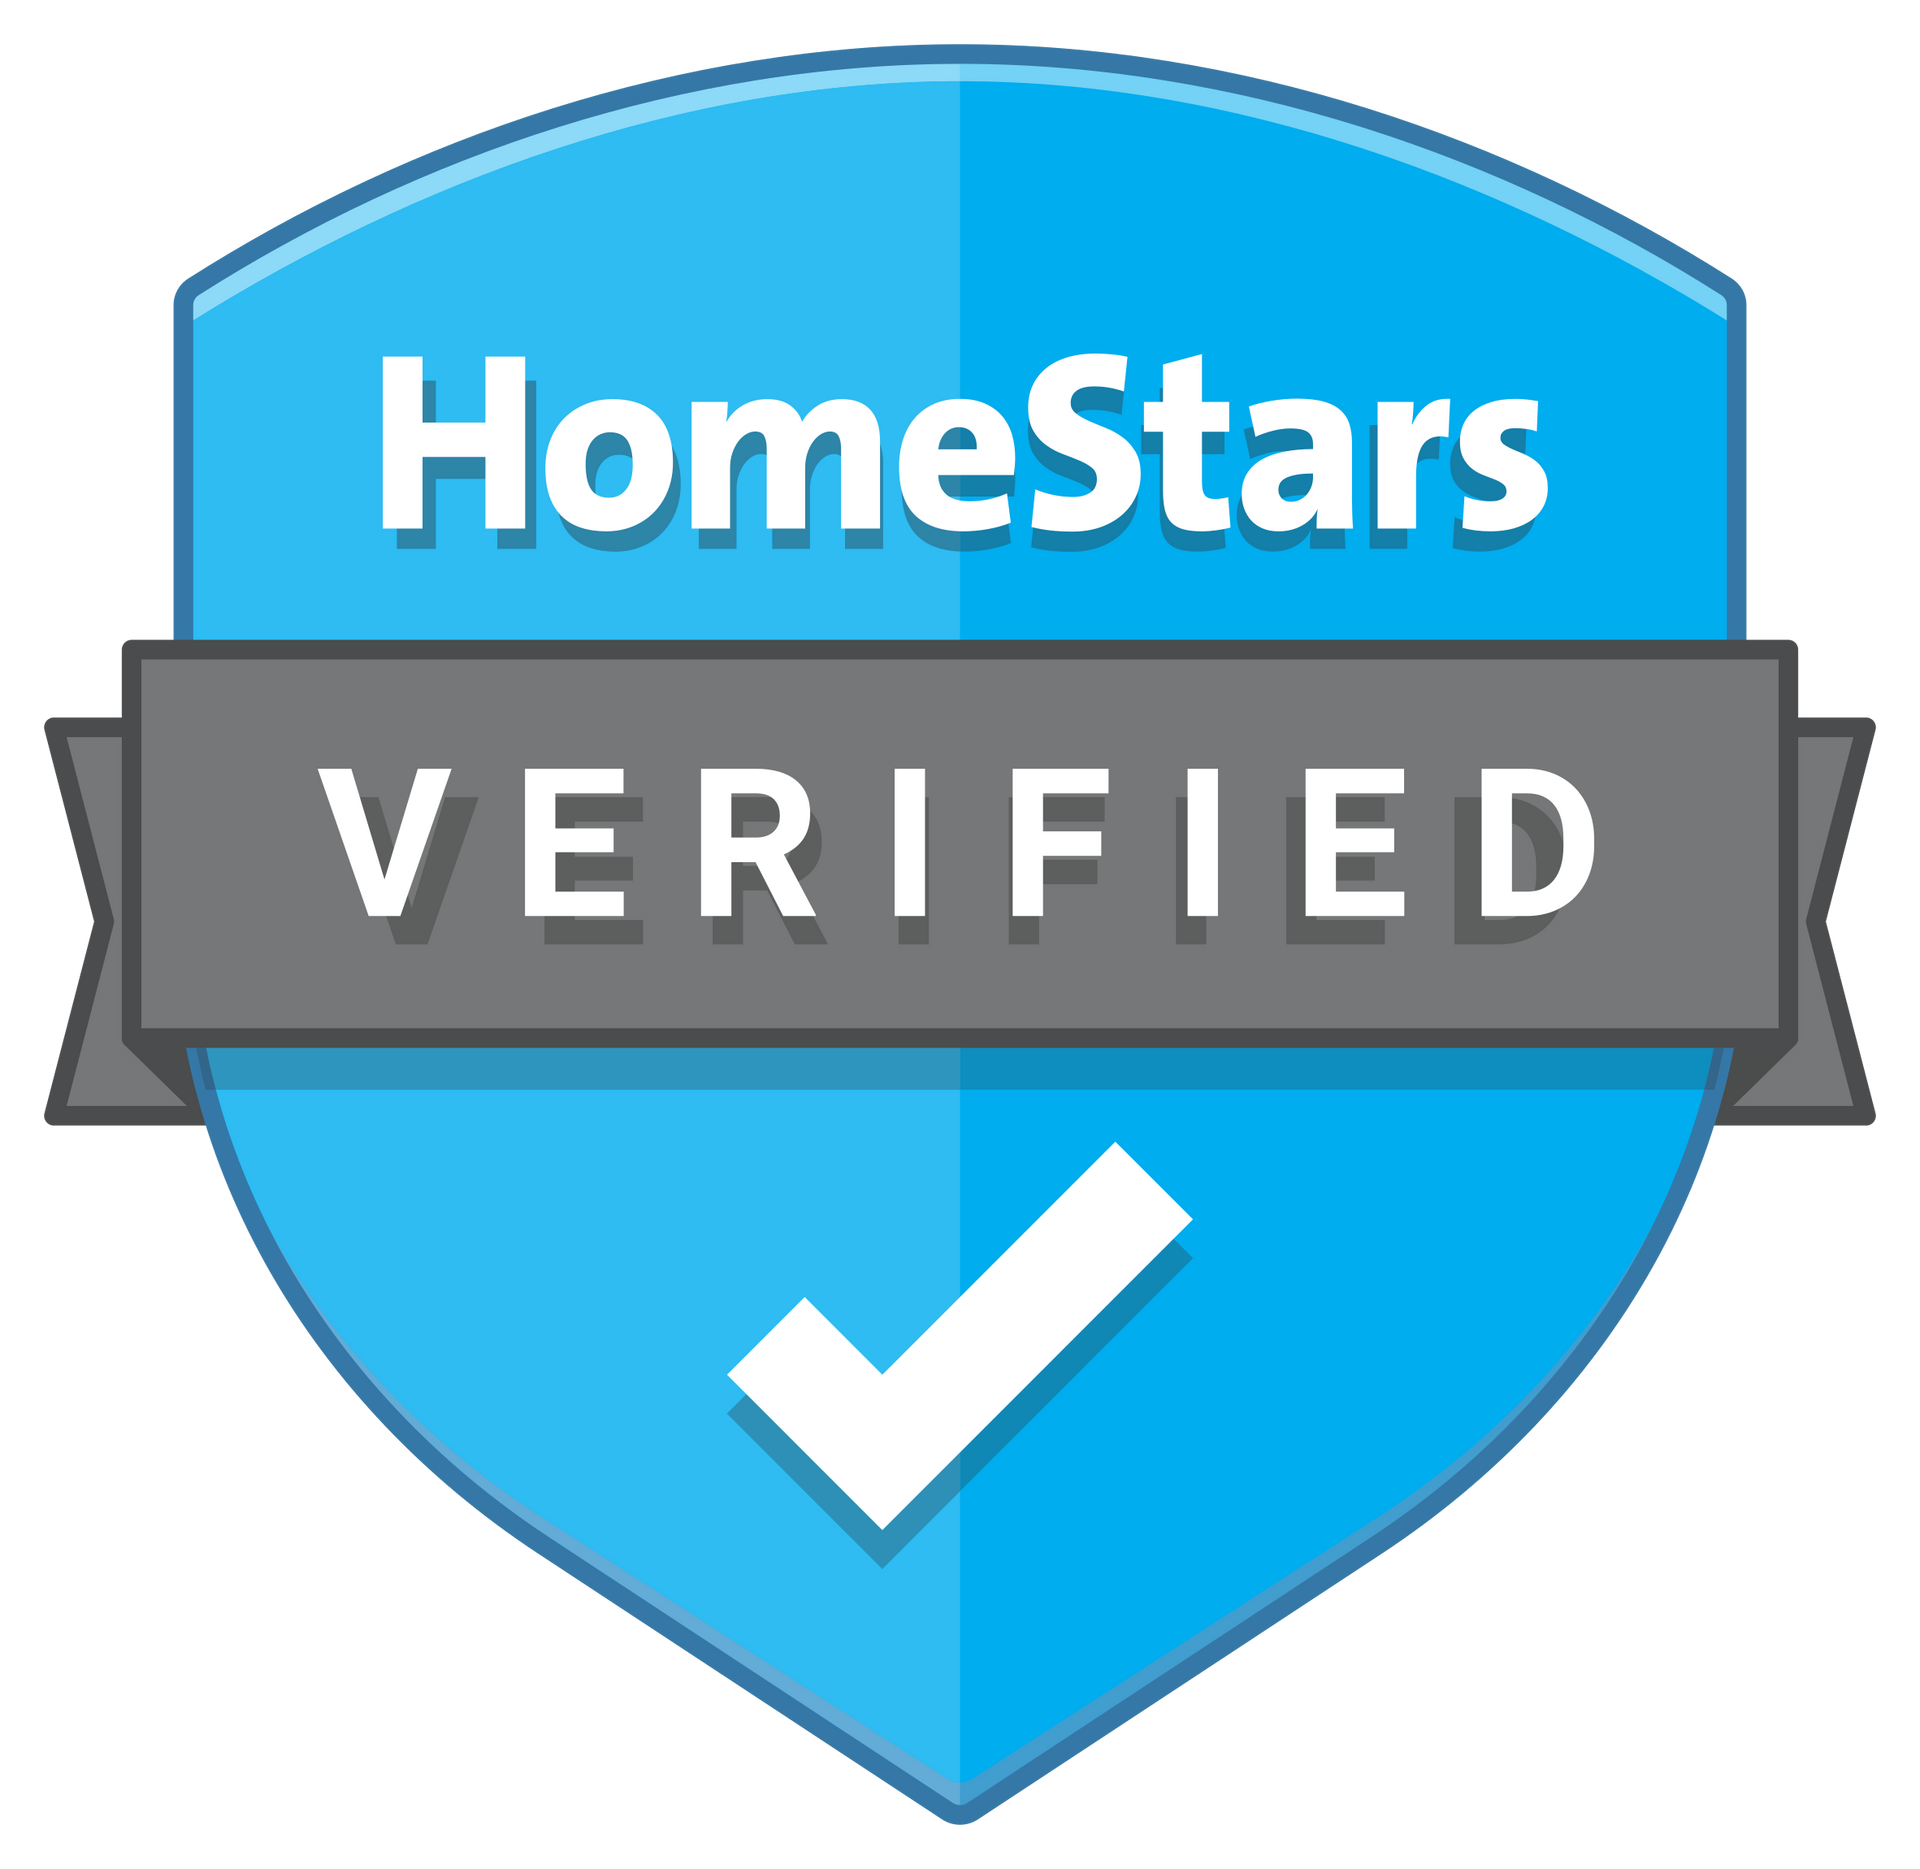 HomeStars verified badge